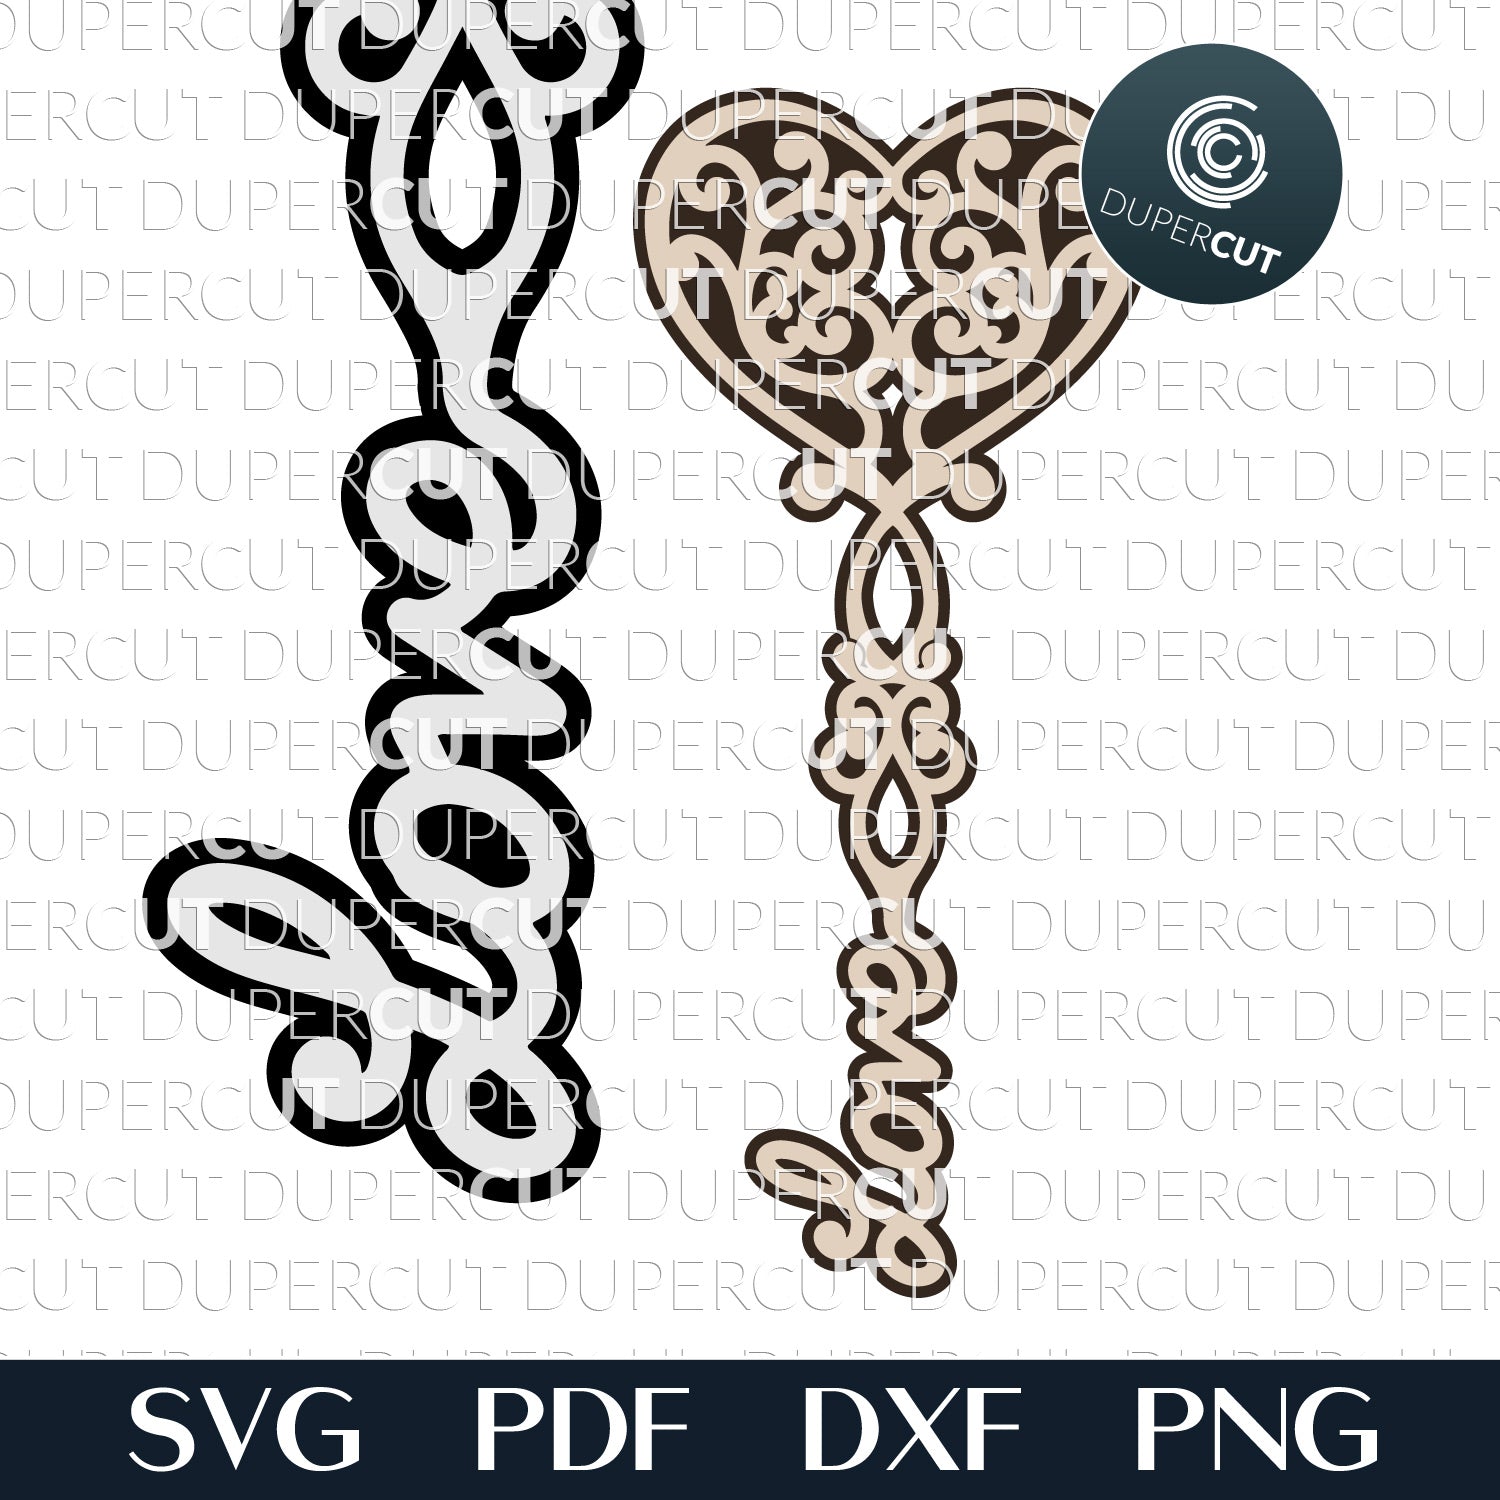 Unlock my heart - Valentine's day key layered decoration SVG DXF vector files for Glowforge, Cricut, Silhouette, CNC plasma, scroll saw by DuperCut.com